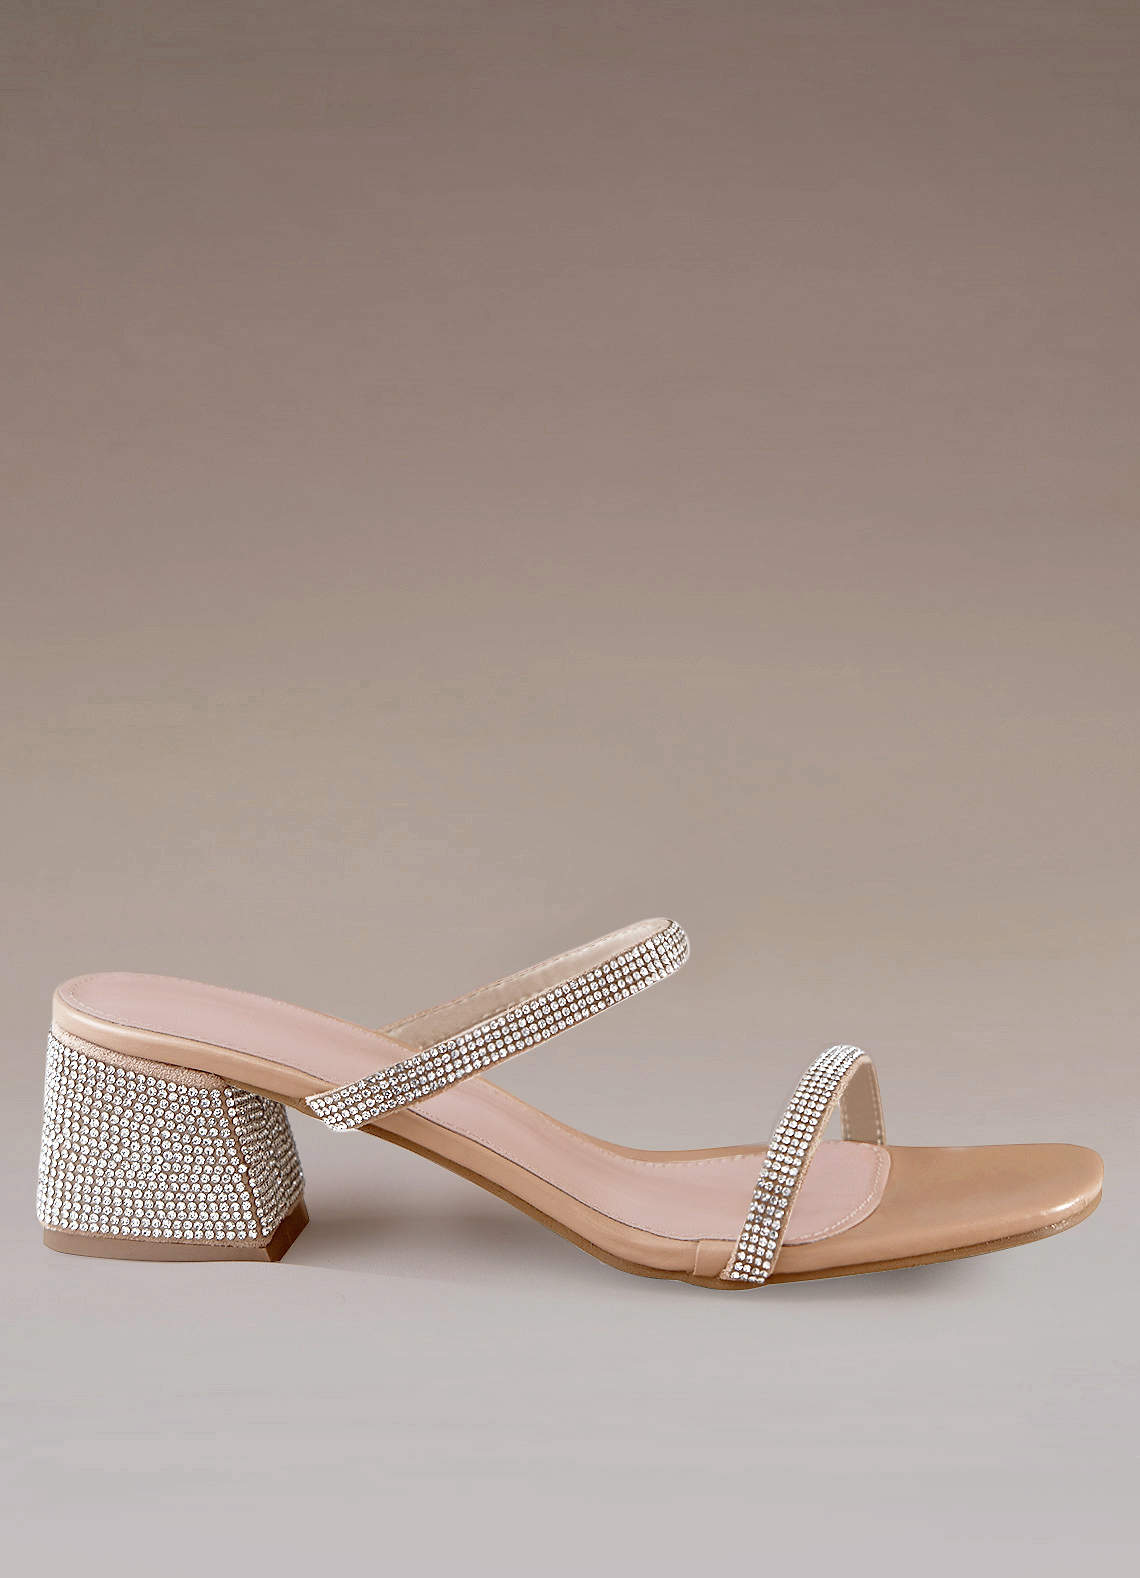 Heeled sandals with rhinestone straps - Women